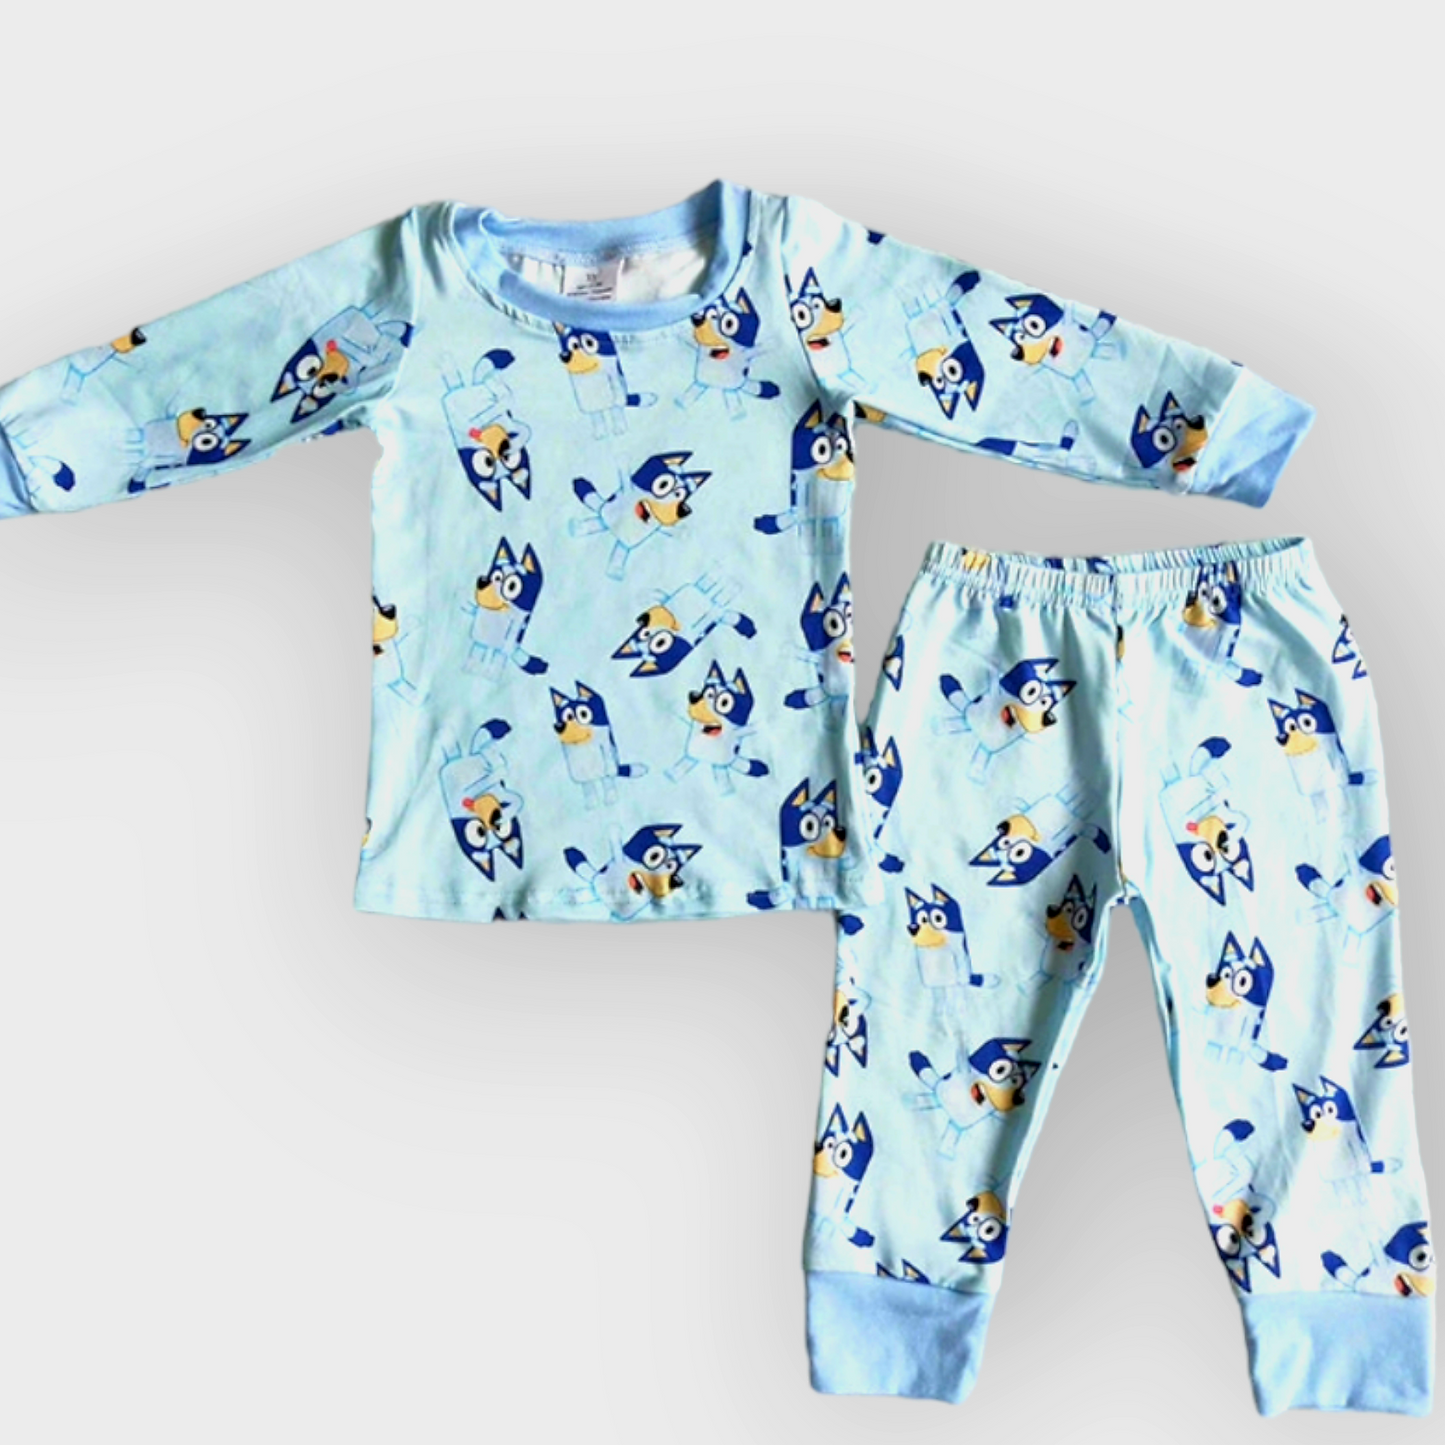 Bluey dog pajamas boy or girl